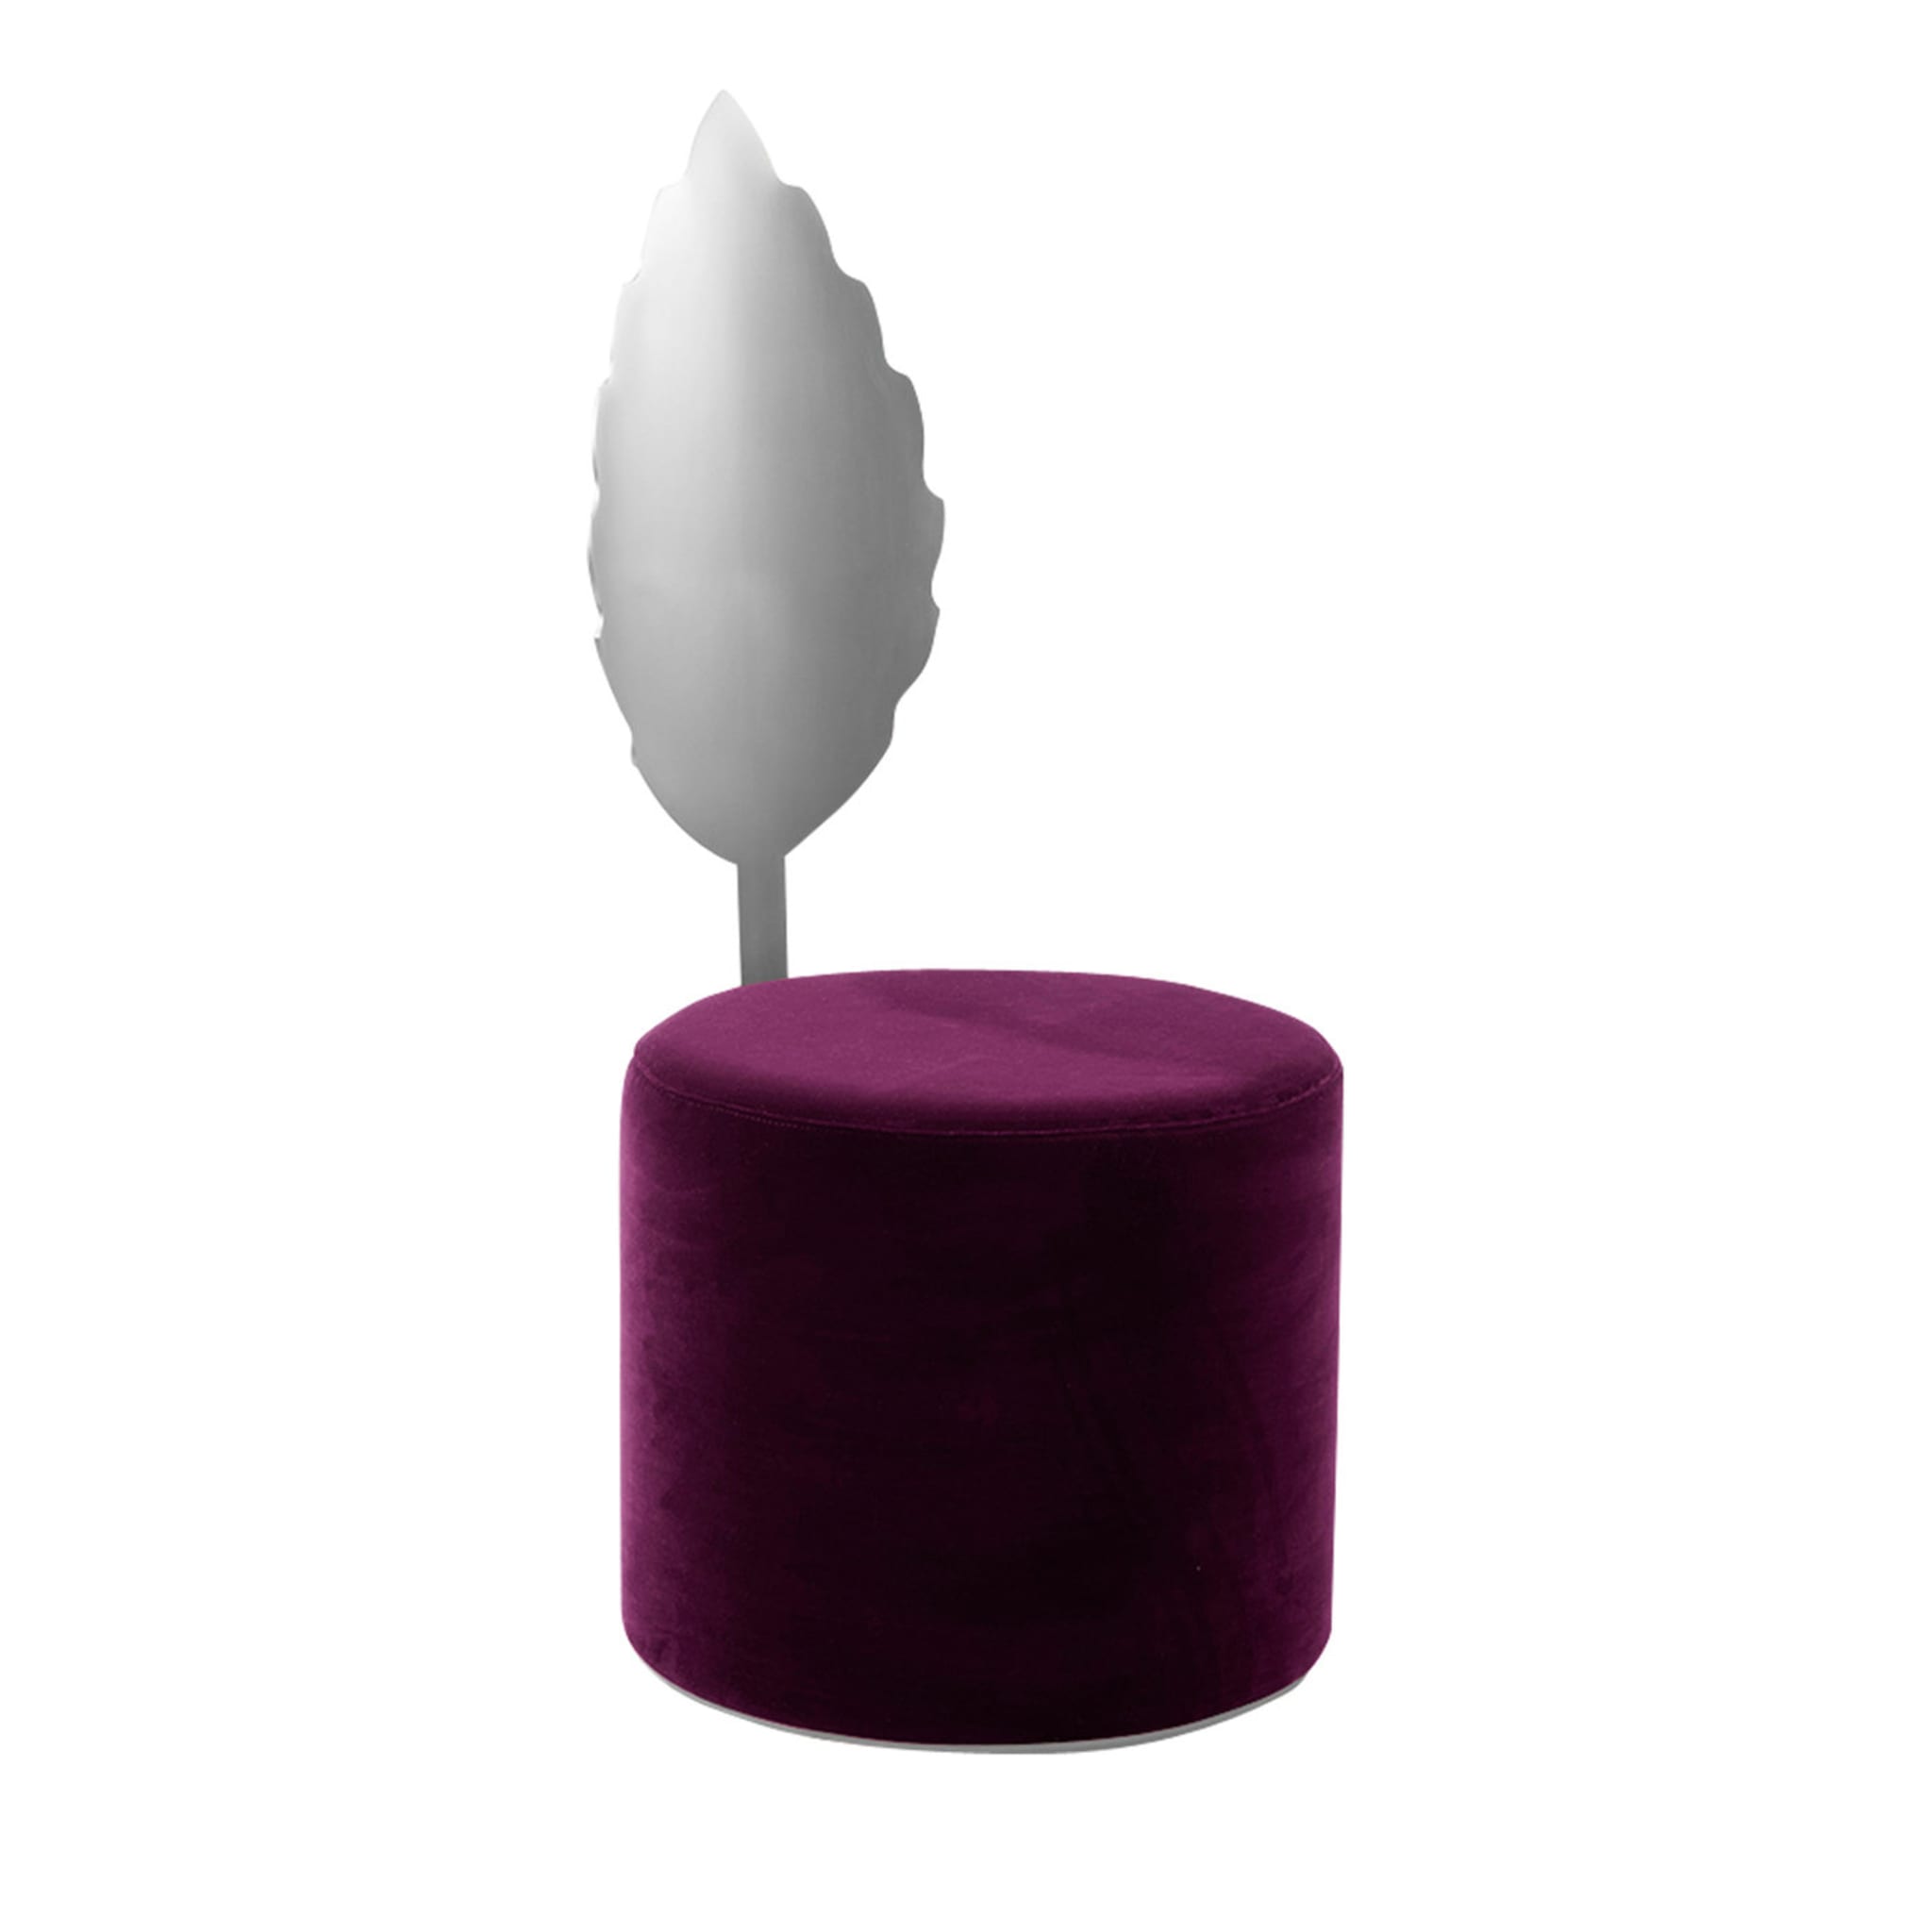 Holly Purple Pouf #2 by Artefatto Design Studio - Main view